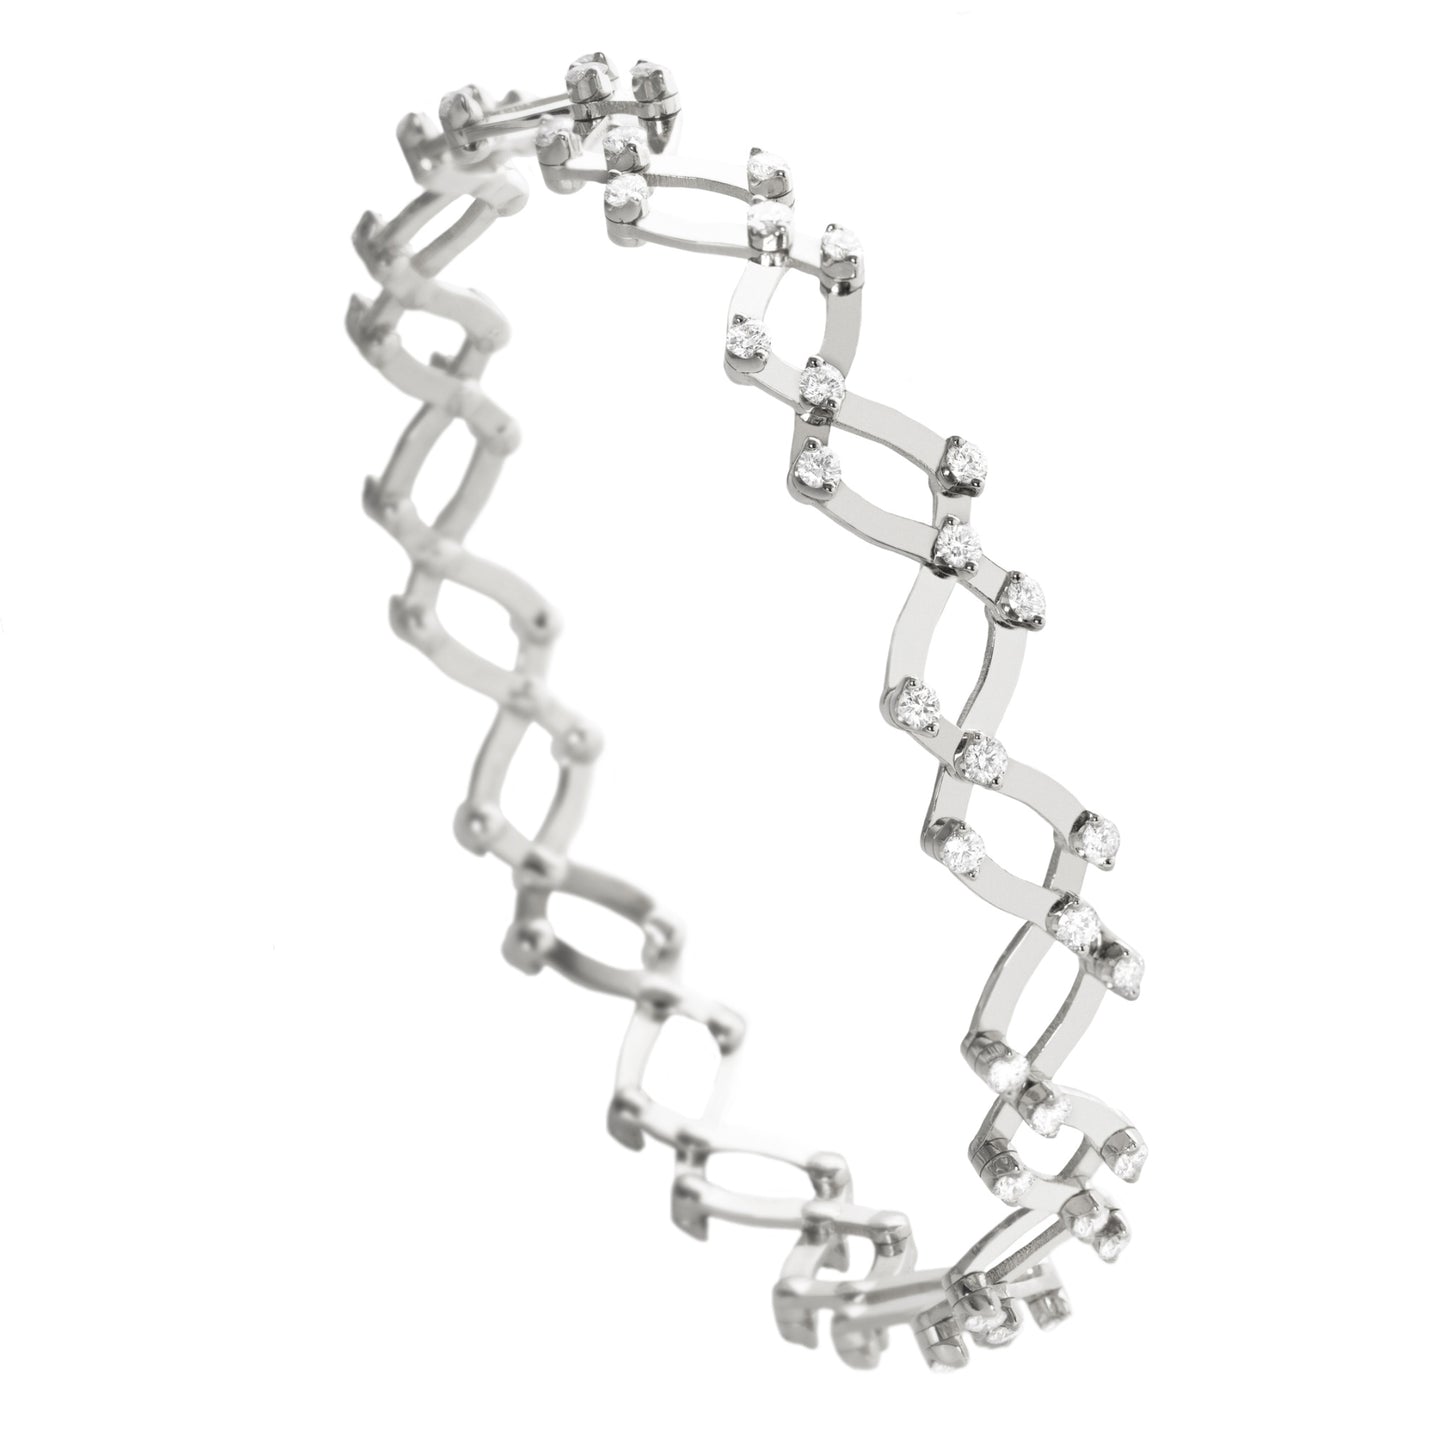 Serafino Multi-Size Ring und Armband von Serafino Consoli online kaufen (Ref. SRB 1492 F4 WG WD)